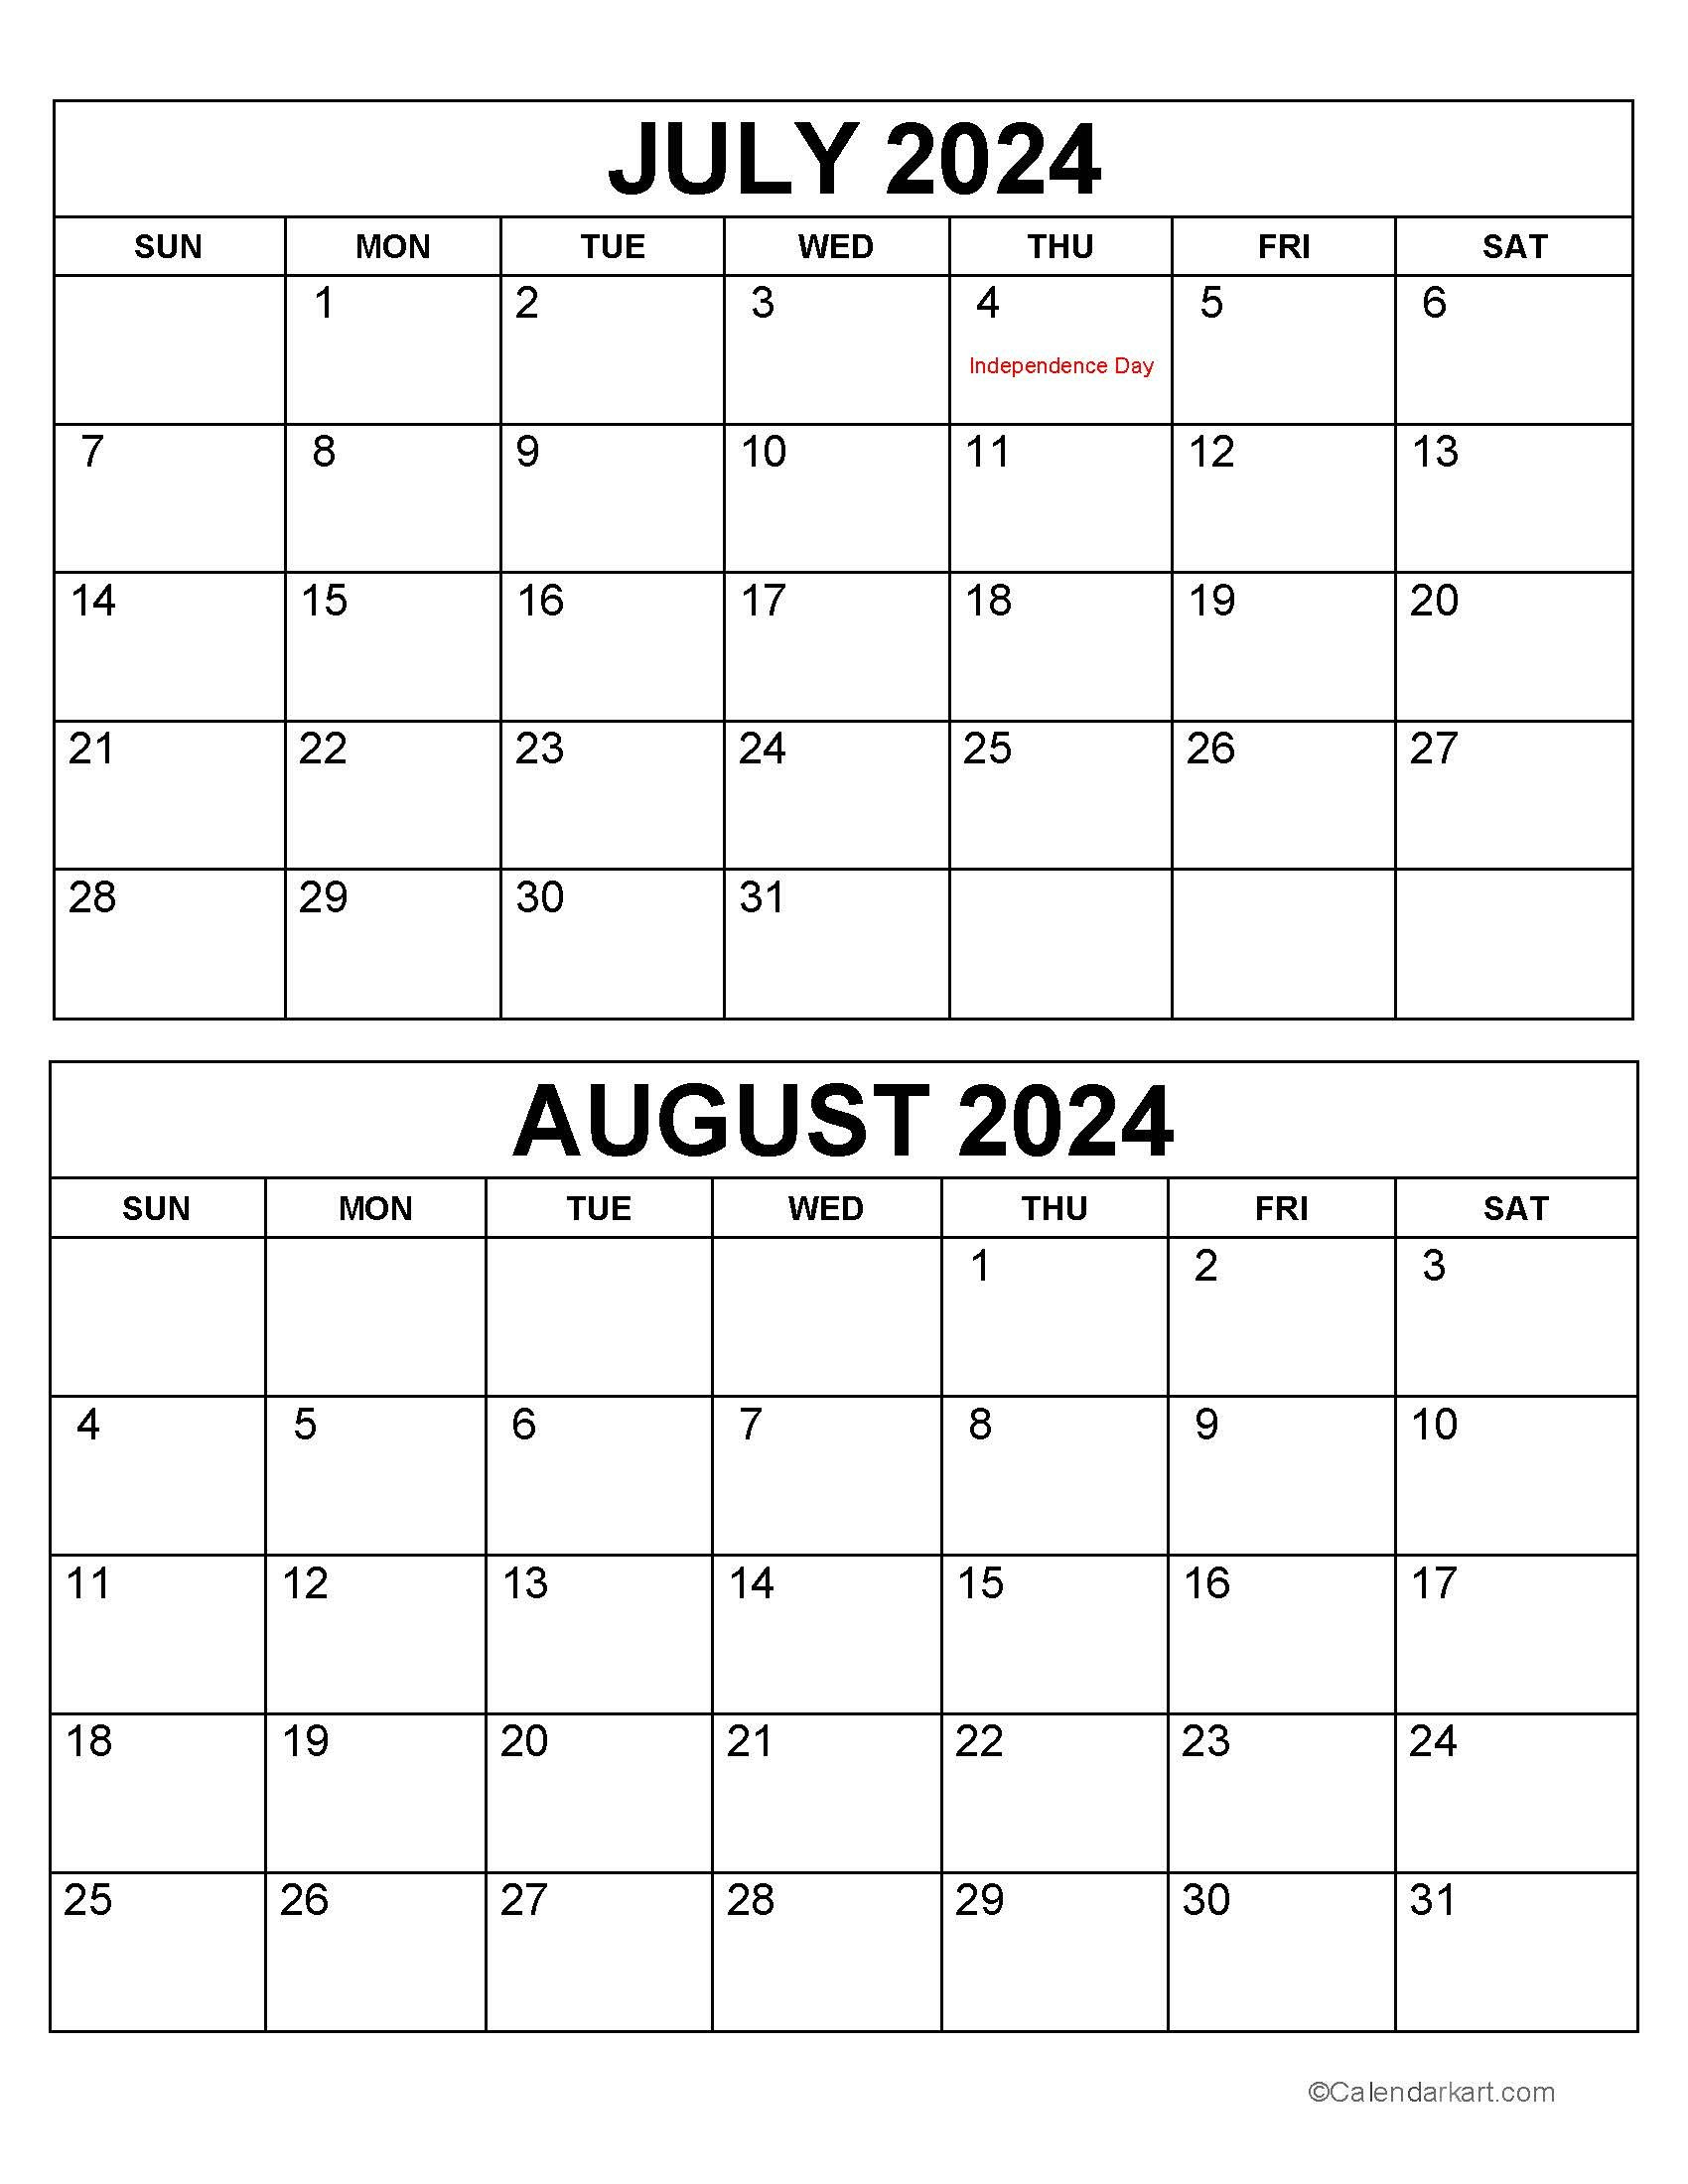 Printable July August 2024 Calendar | Calendarkart with regard to Calendar July 2024 August 2024